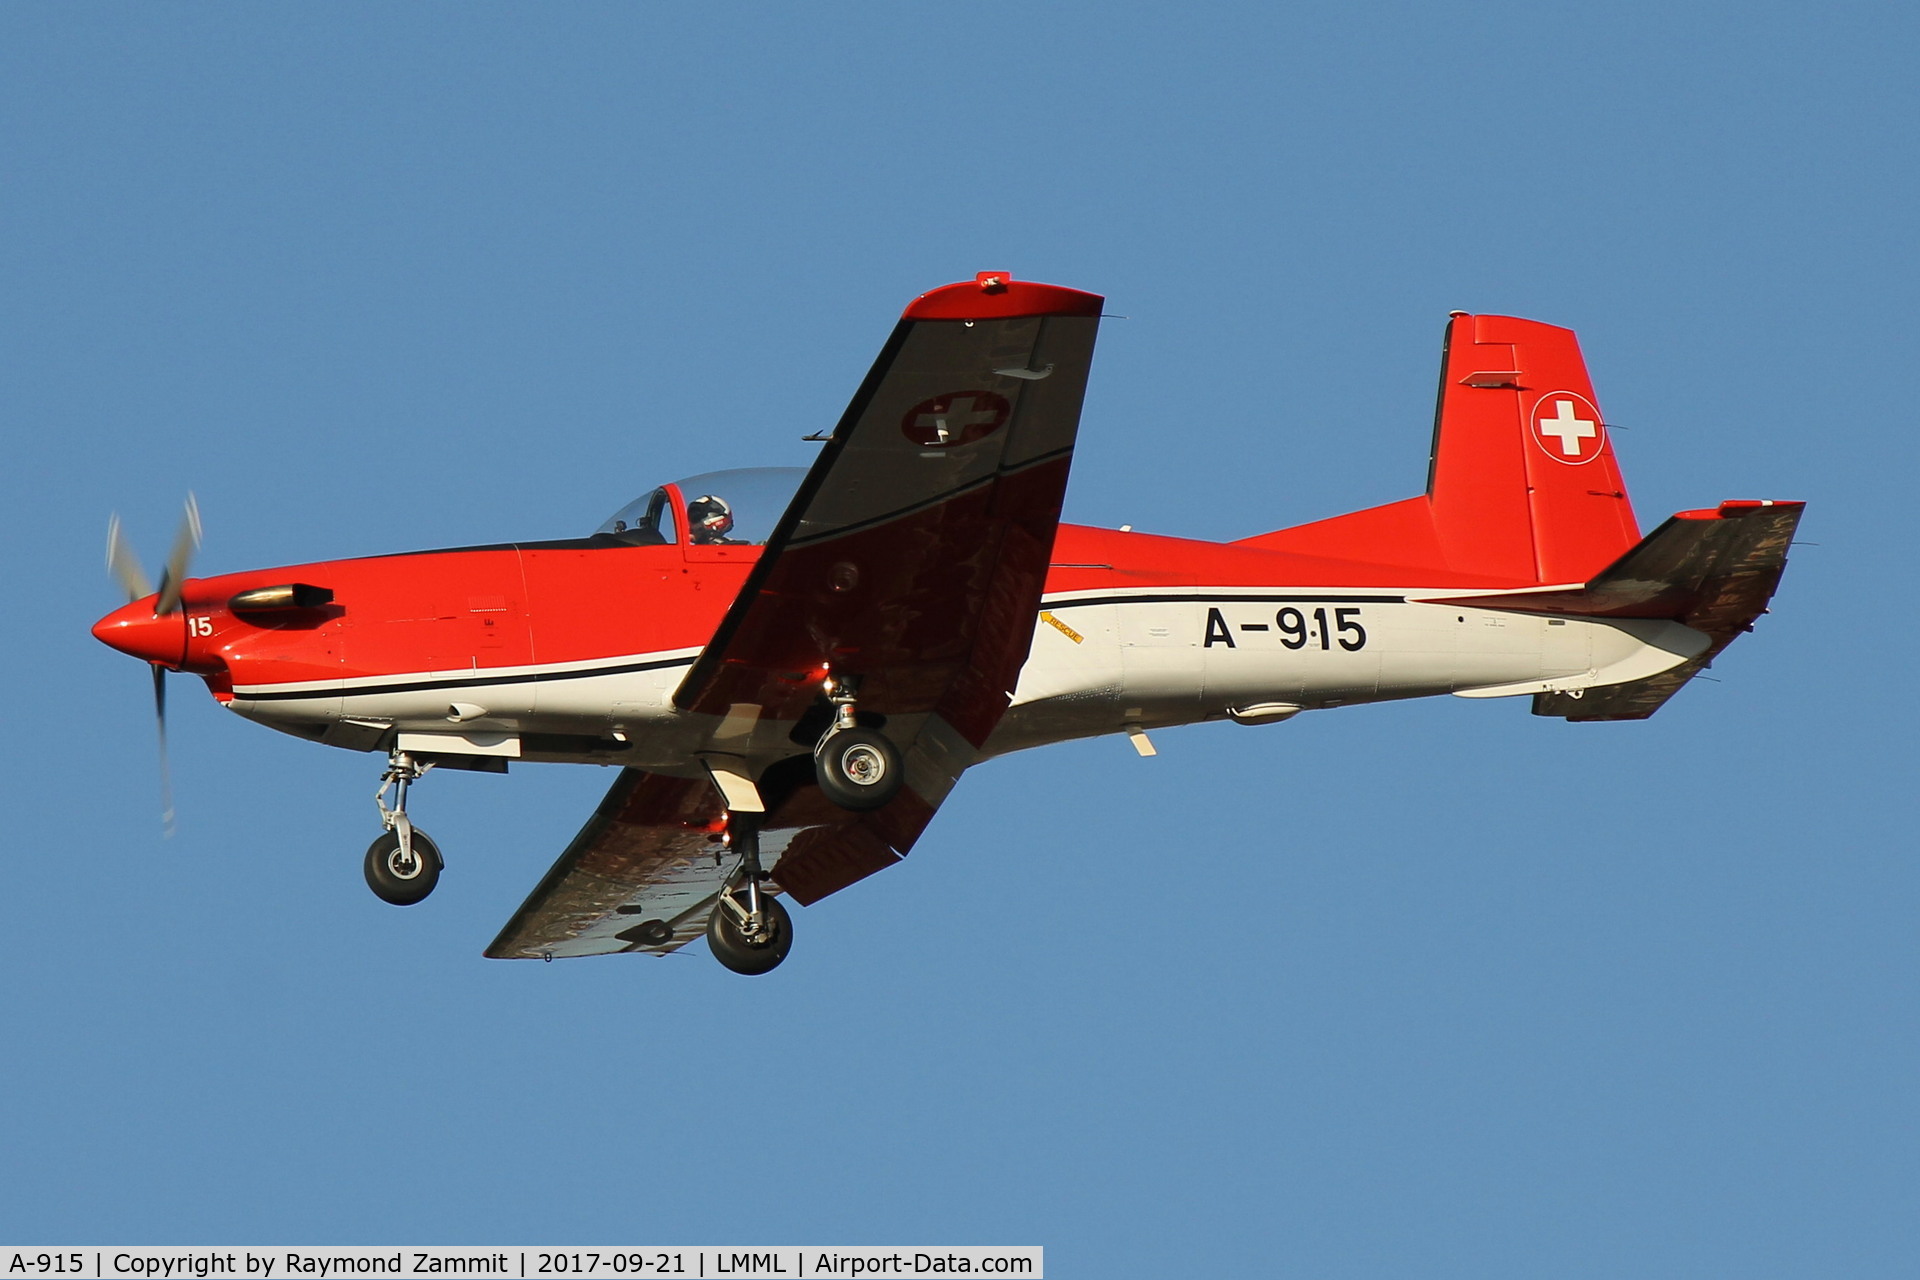 A-915, 1983 Pilatus PC-7 Turbo Trainer C/N 323, Pilatus PC-7 A-915 Swiss Air Force